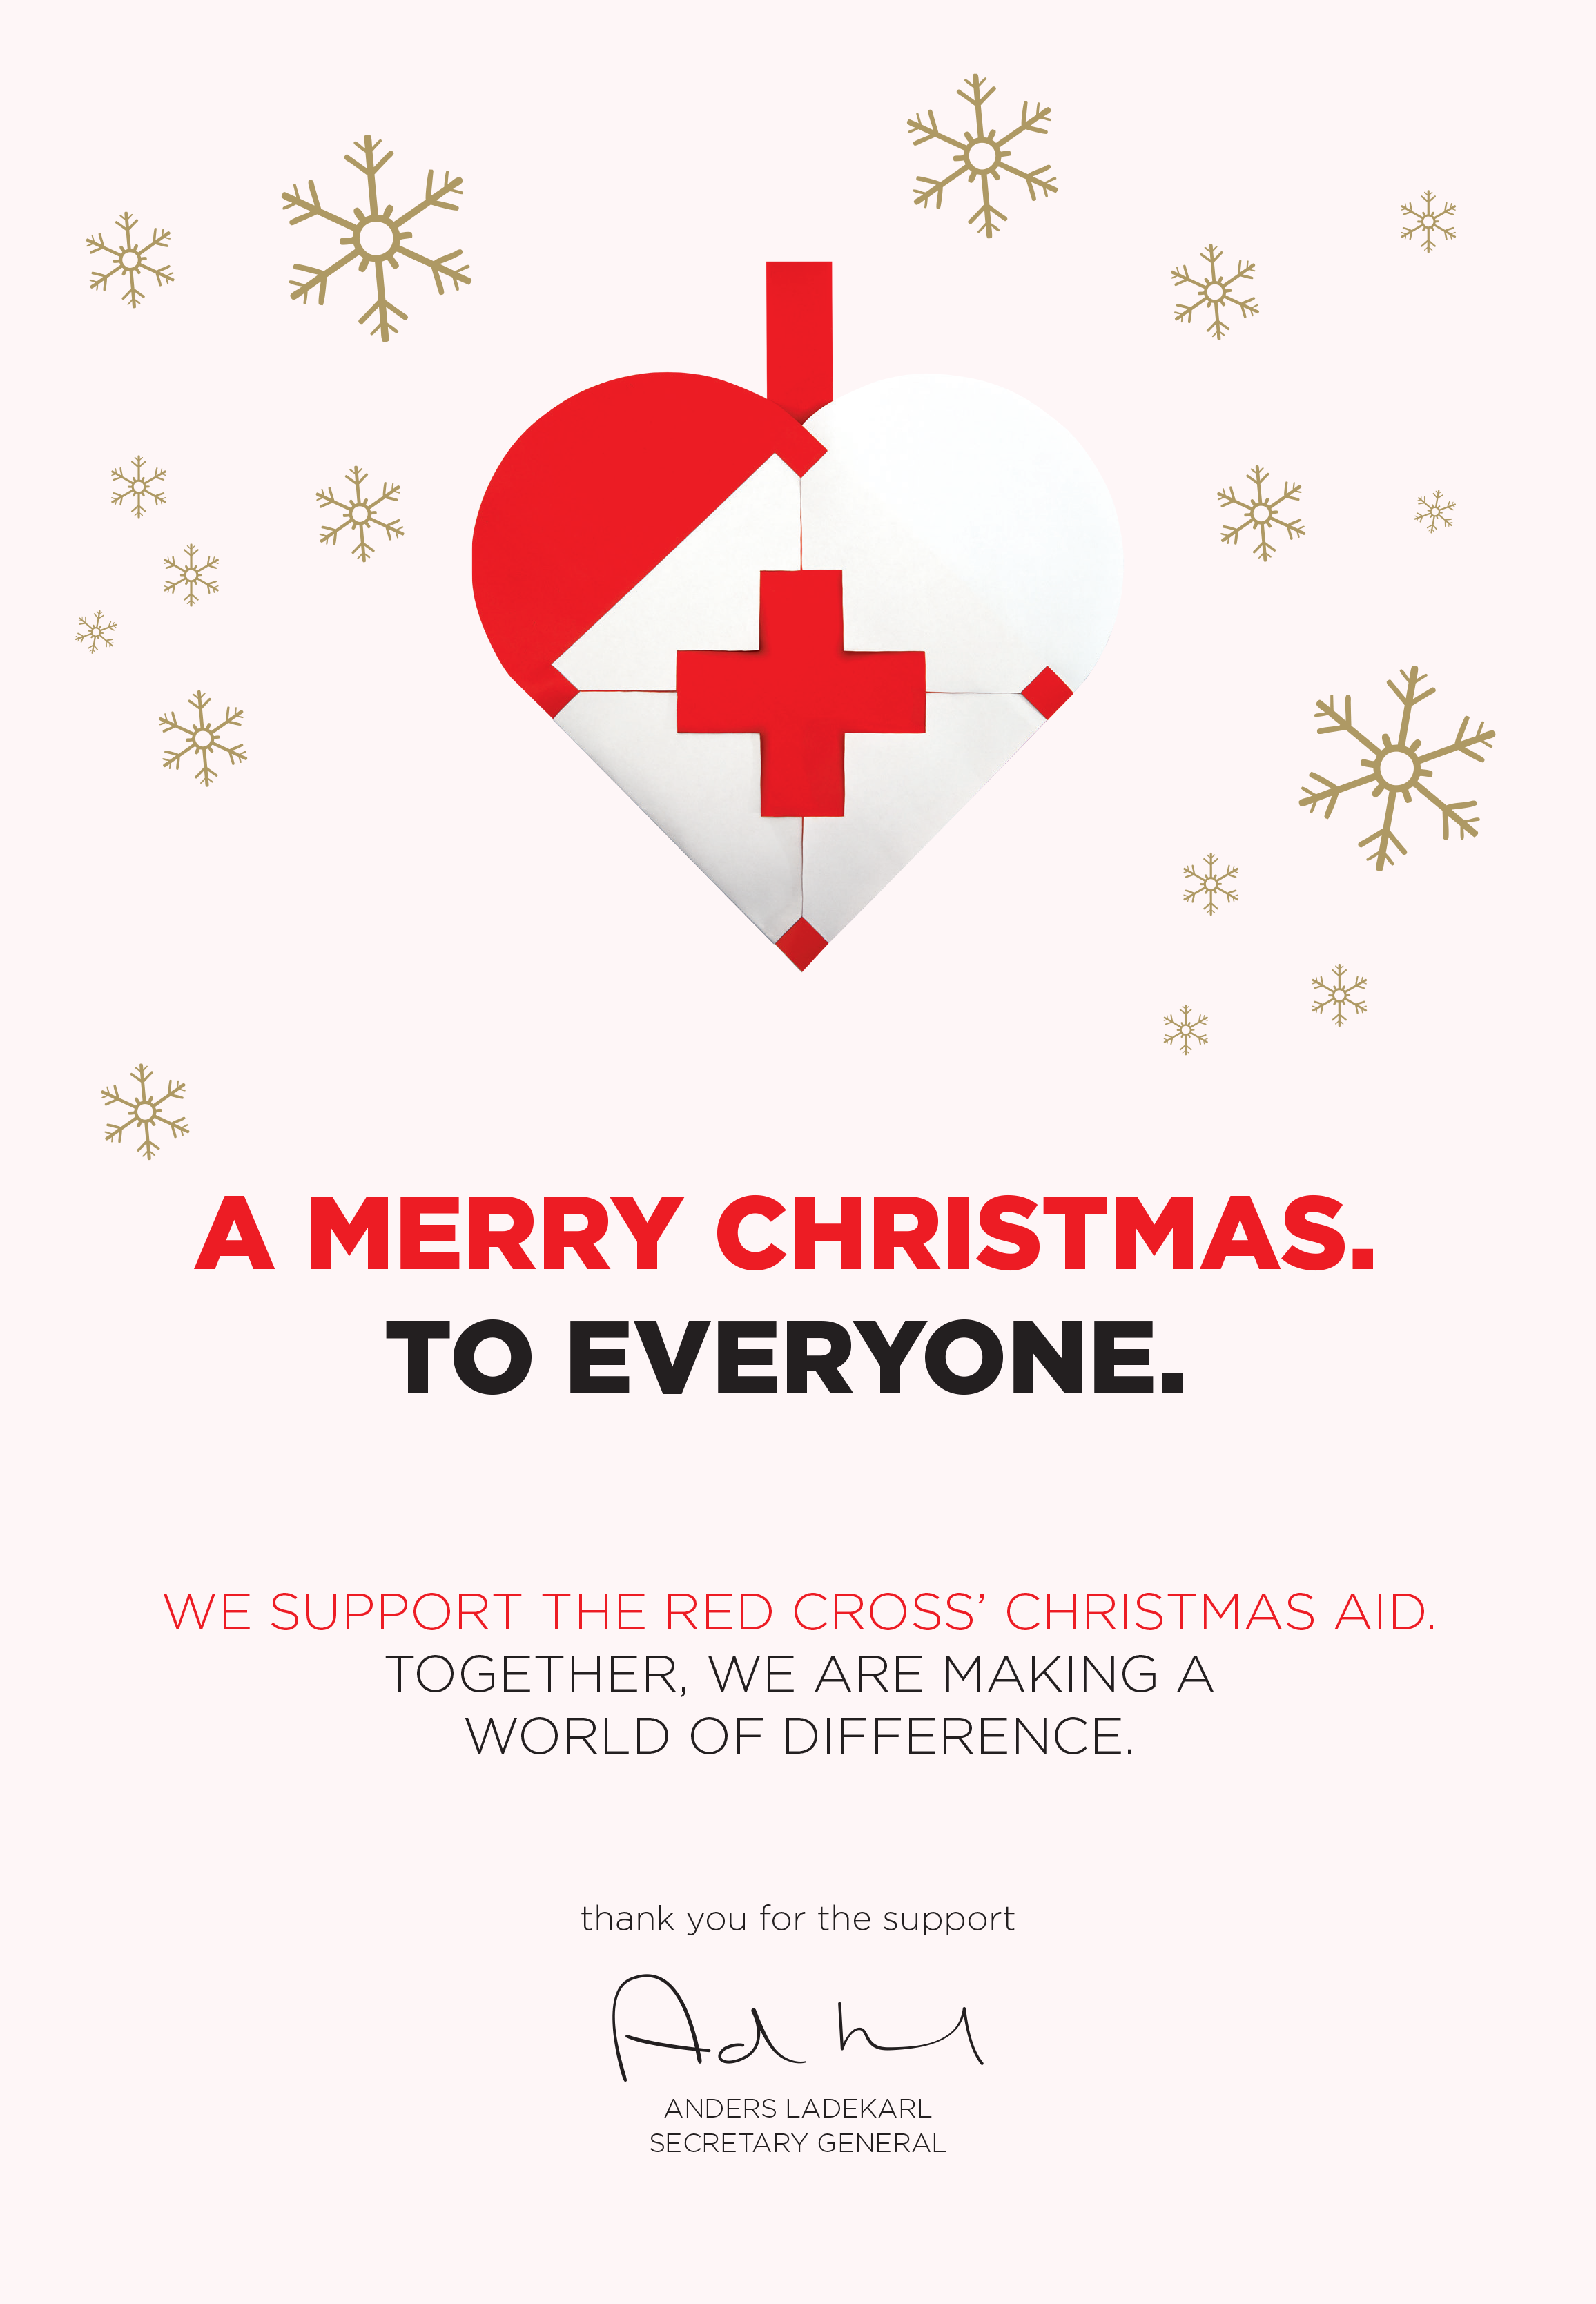 LYNDDAHL supports Danish Red Cross' Christmas aid